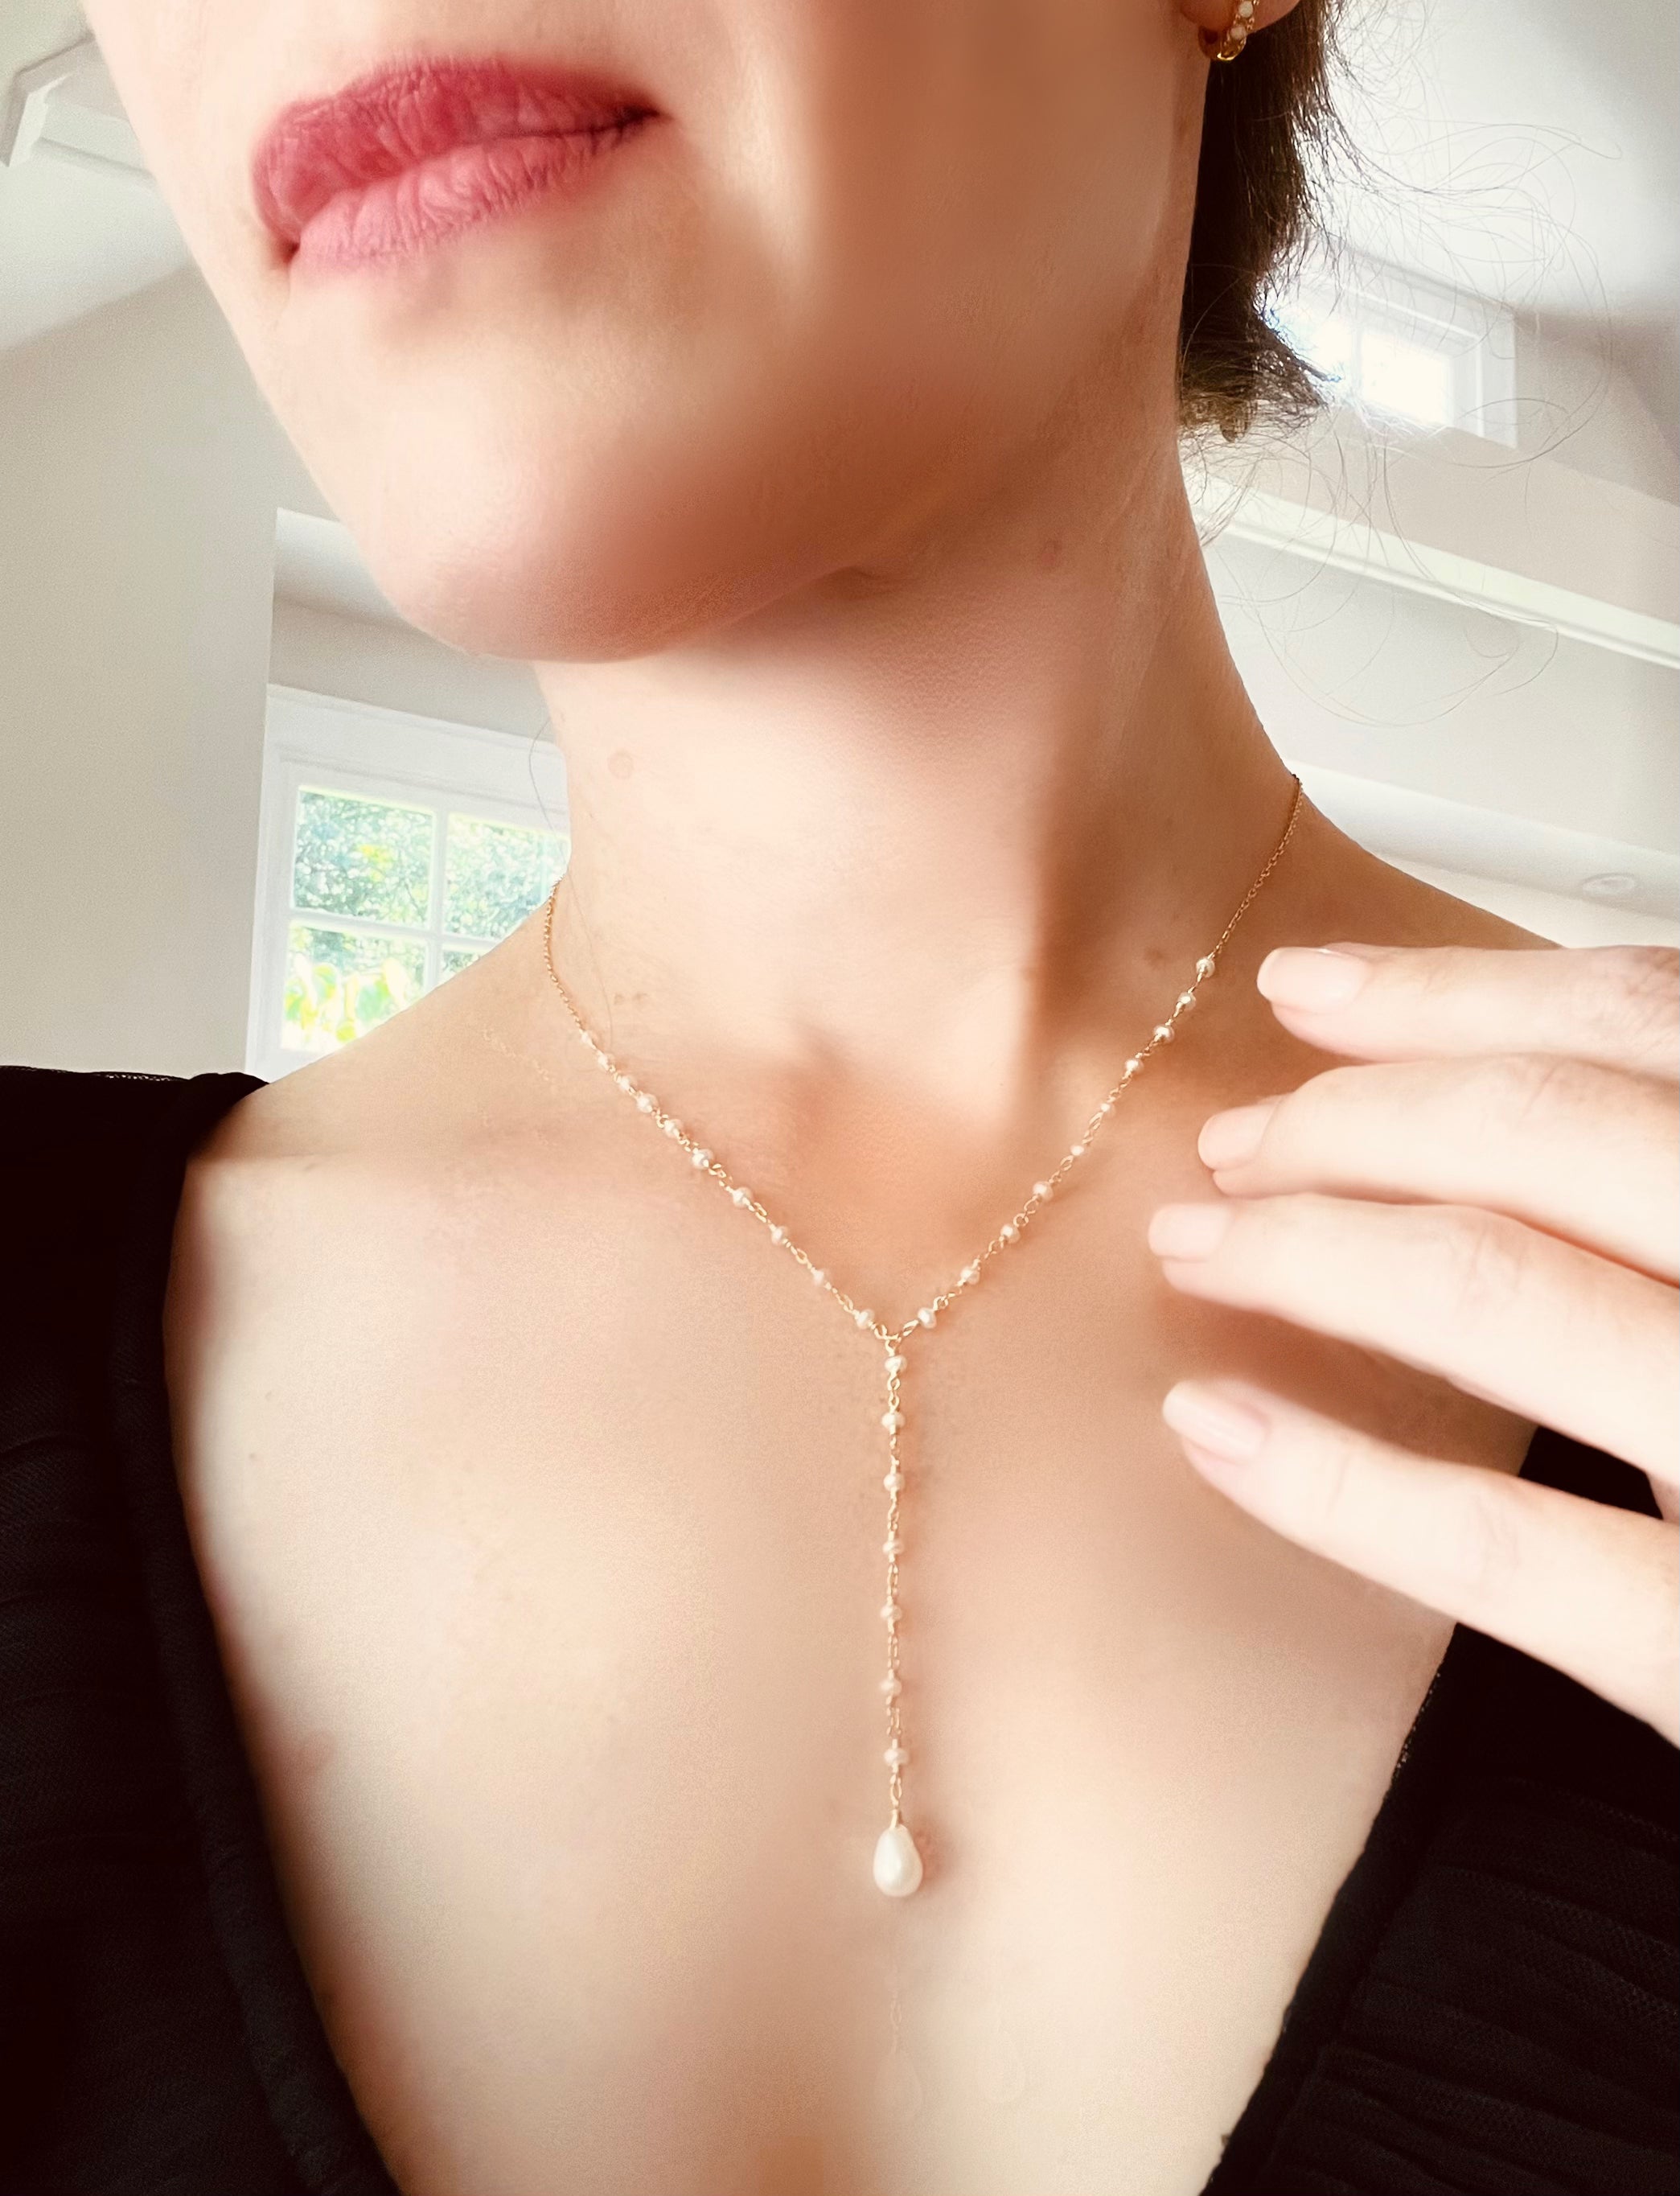 Freshwater pearl necklace, Le 31, Men's Necklaces